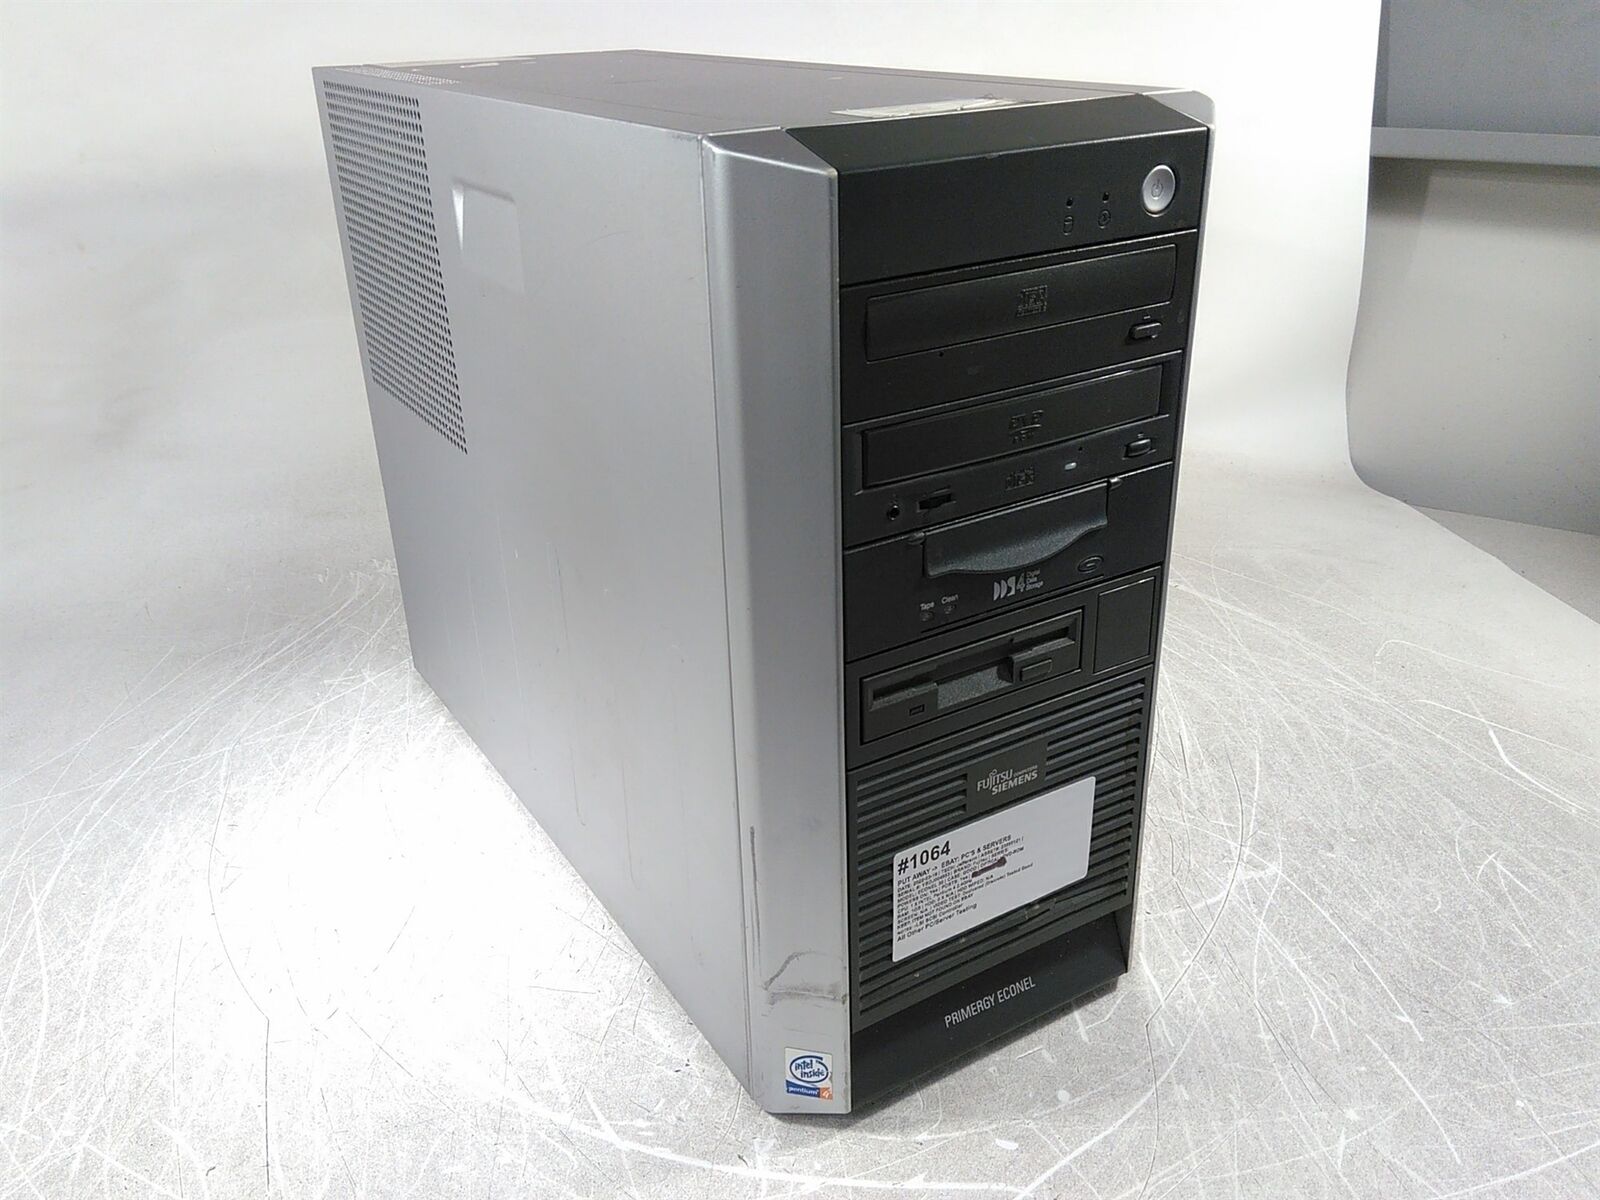 Fujitsu Siemens Primergy ECONEL 30 Tower Intel Pentium 4 2.4GHz 1GB 0HD Boots